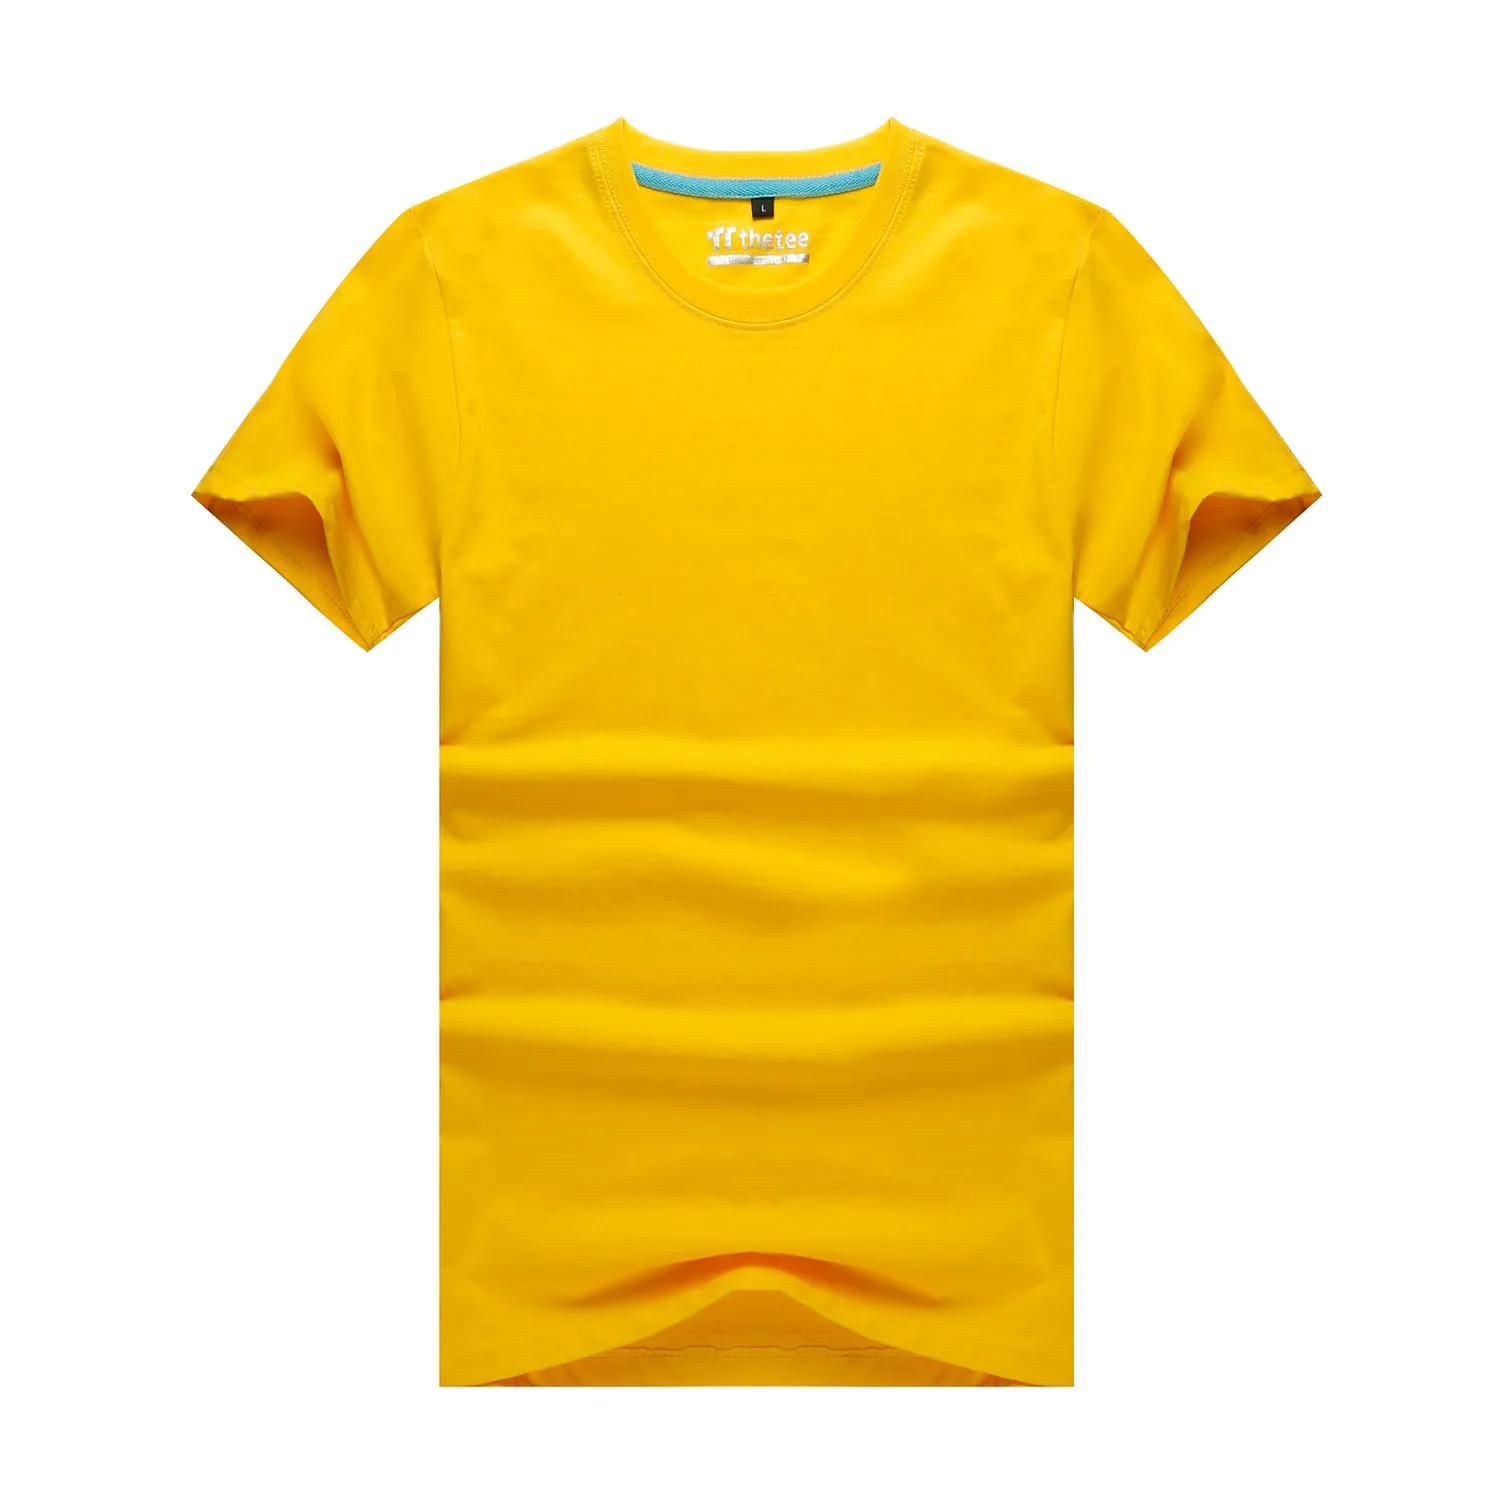 T-shirts in Bulk—Bulk-Order Tees and Save Money